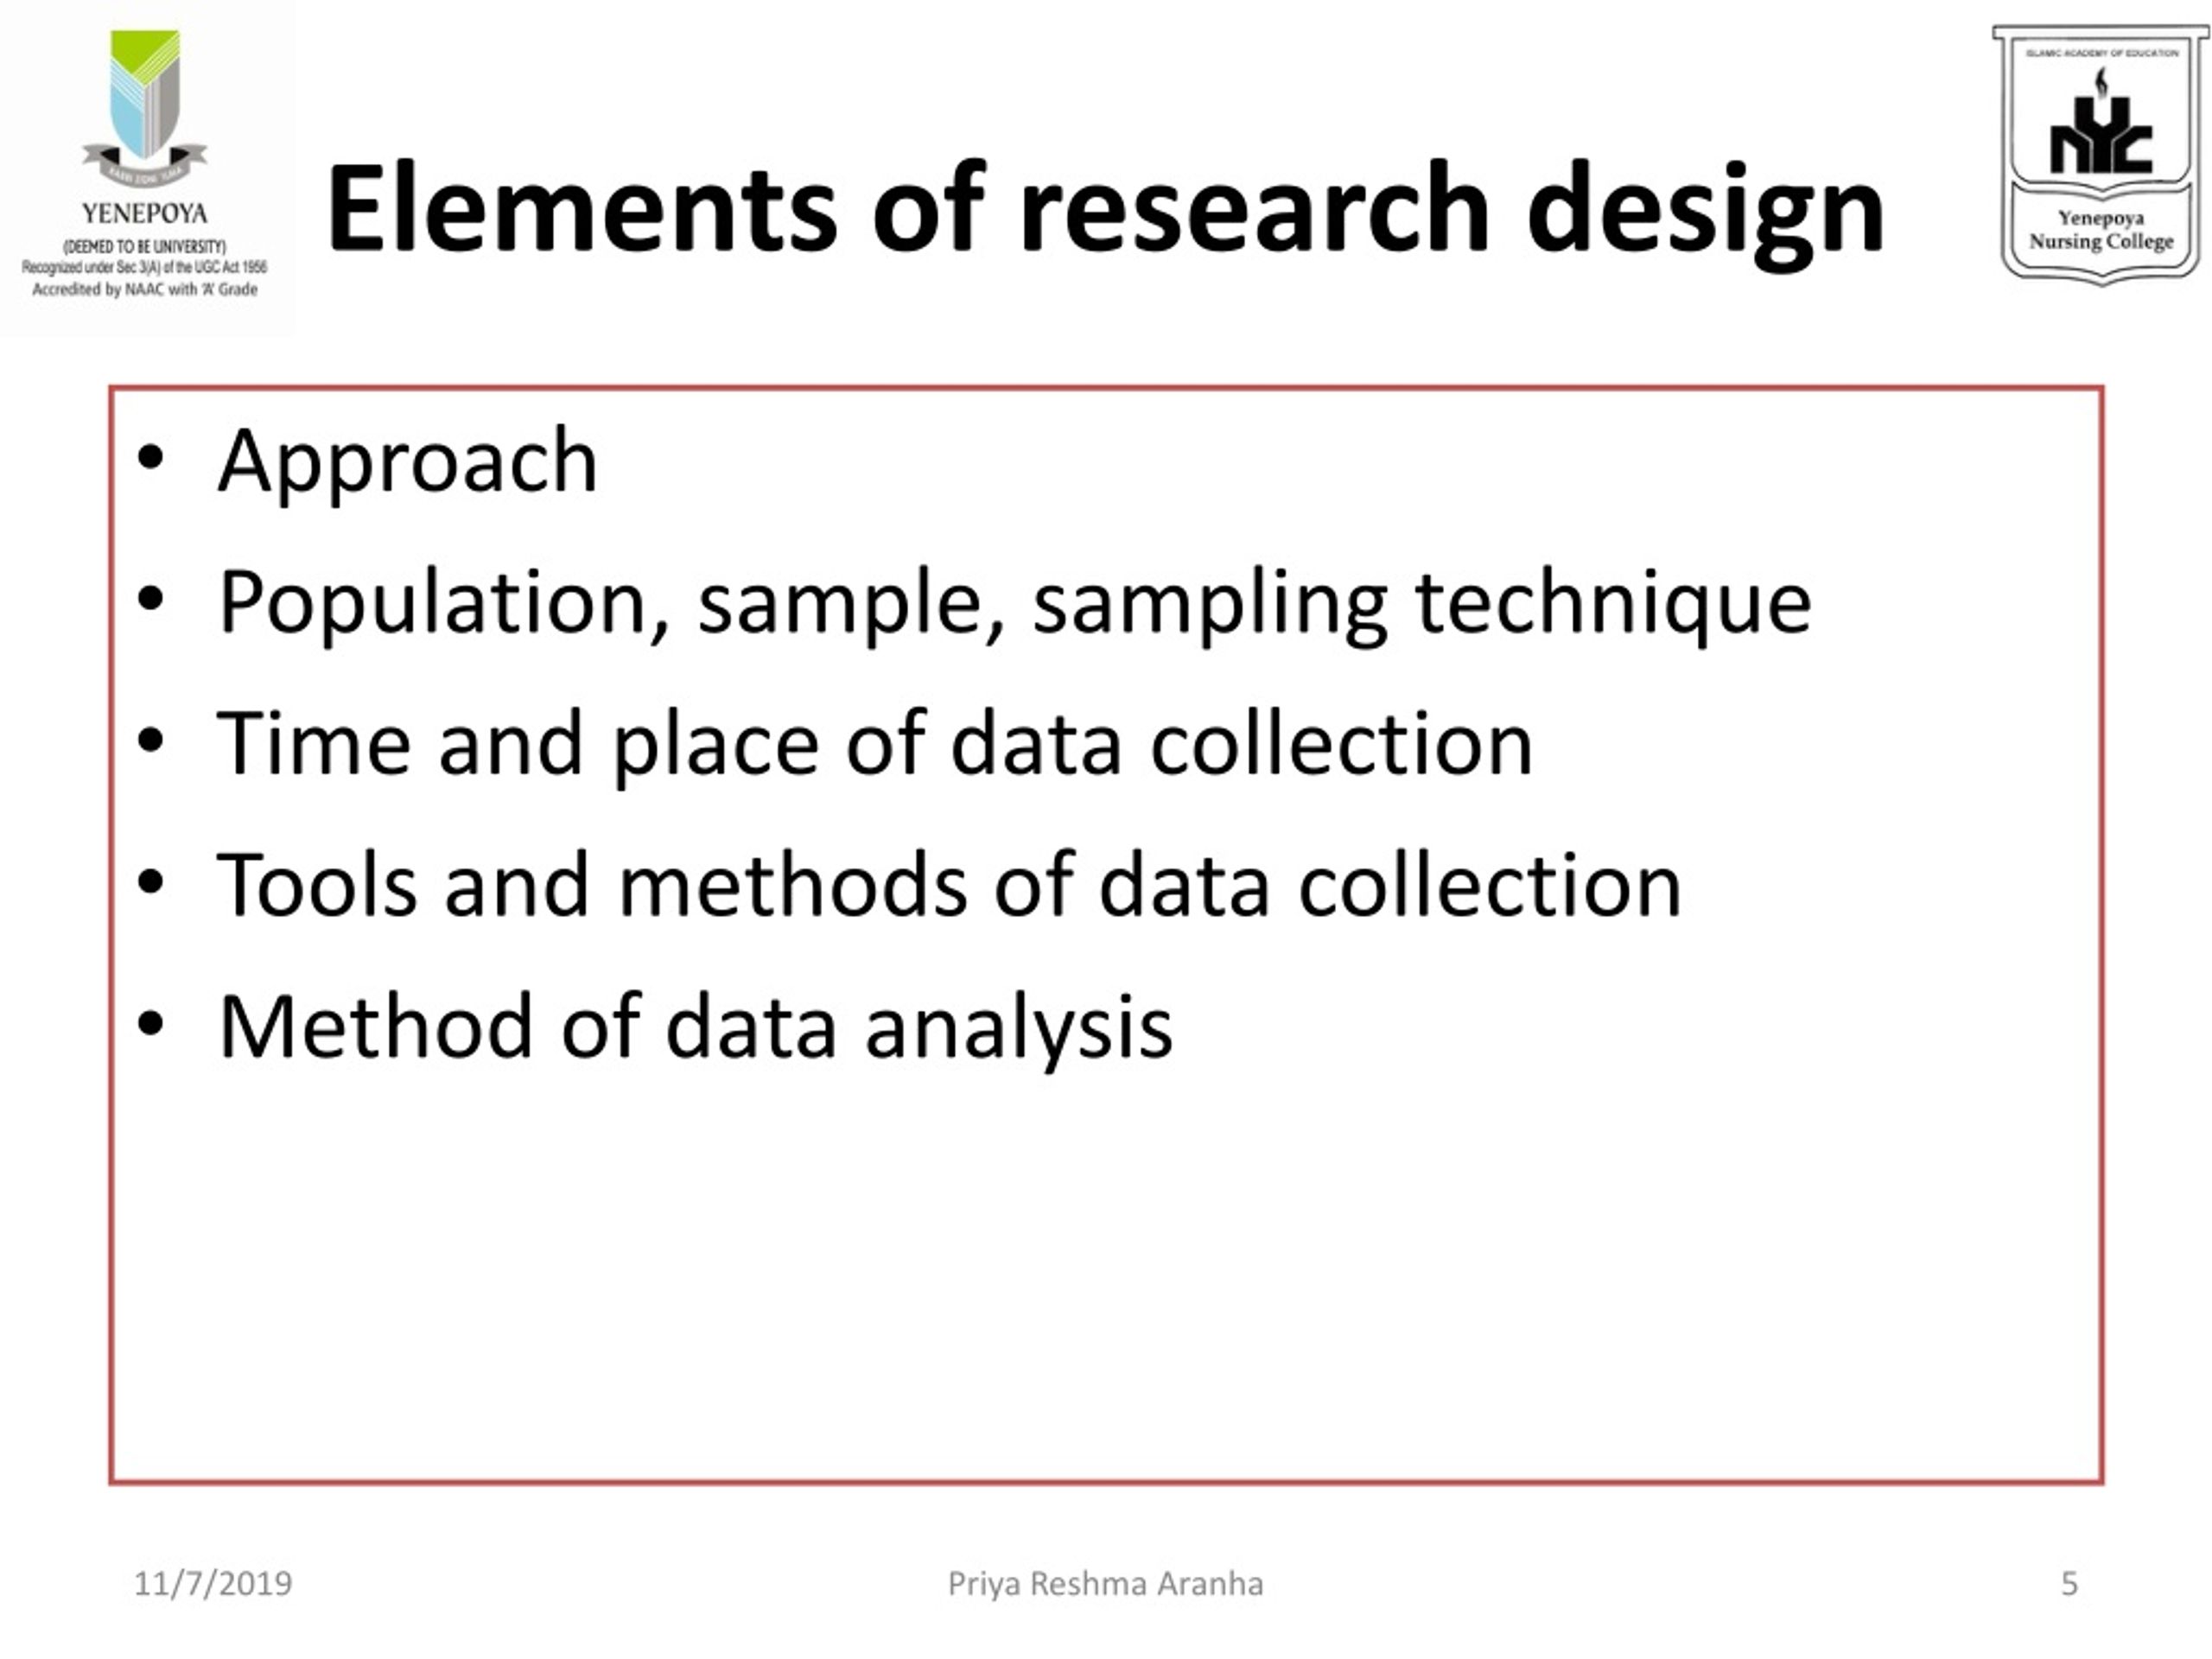 research design elements ppt